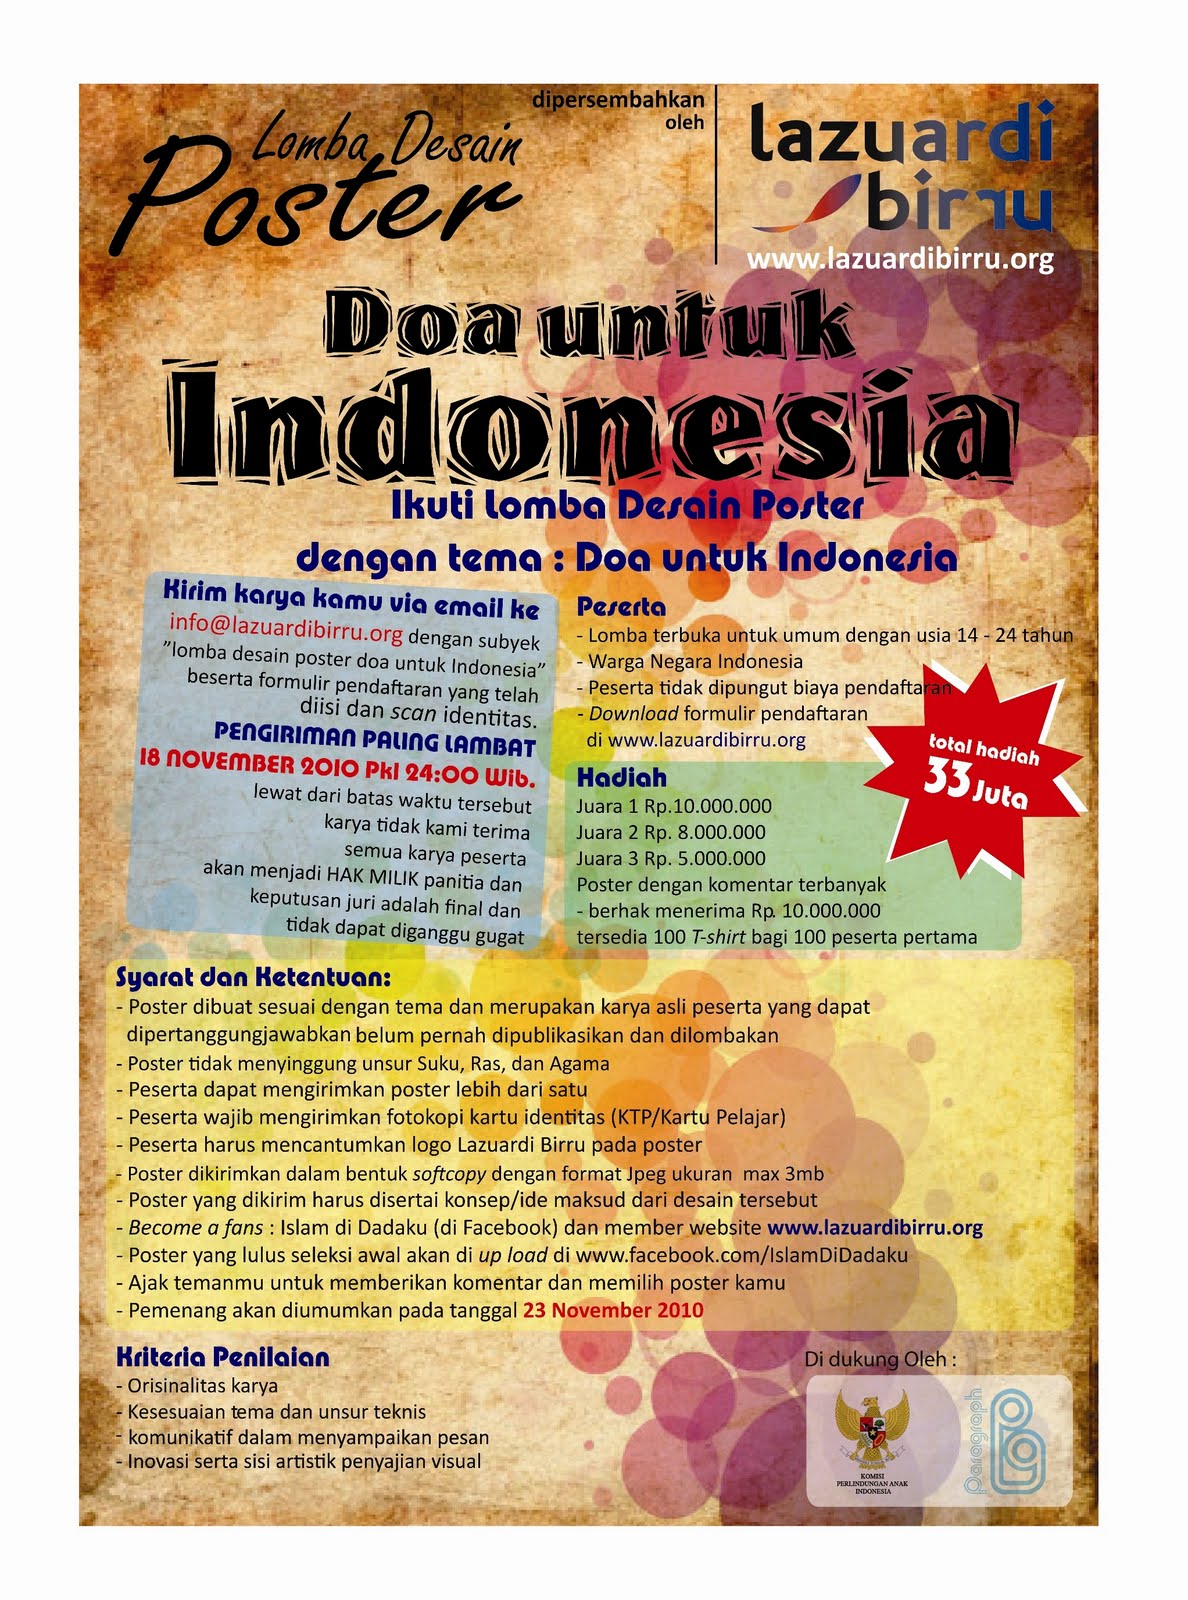 Lazuardi Birru Ikuti Lomba Desain  Poster  Pray For Indonesia  